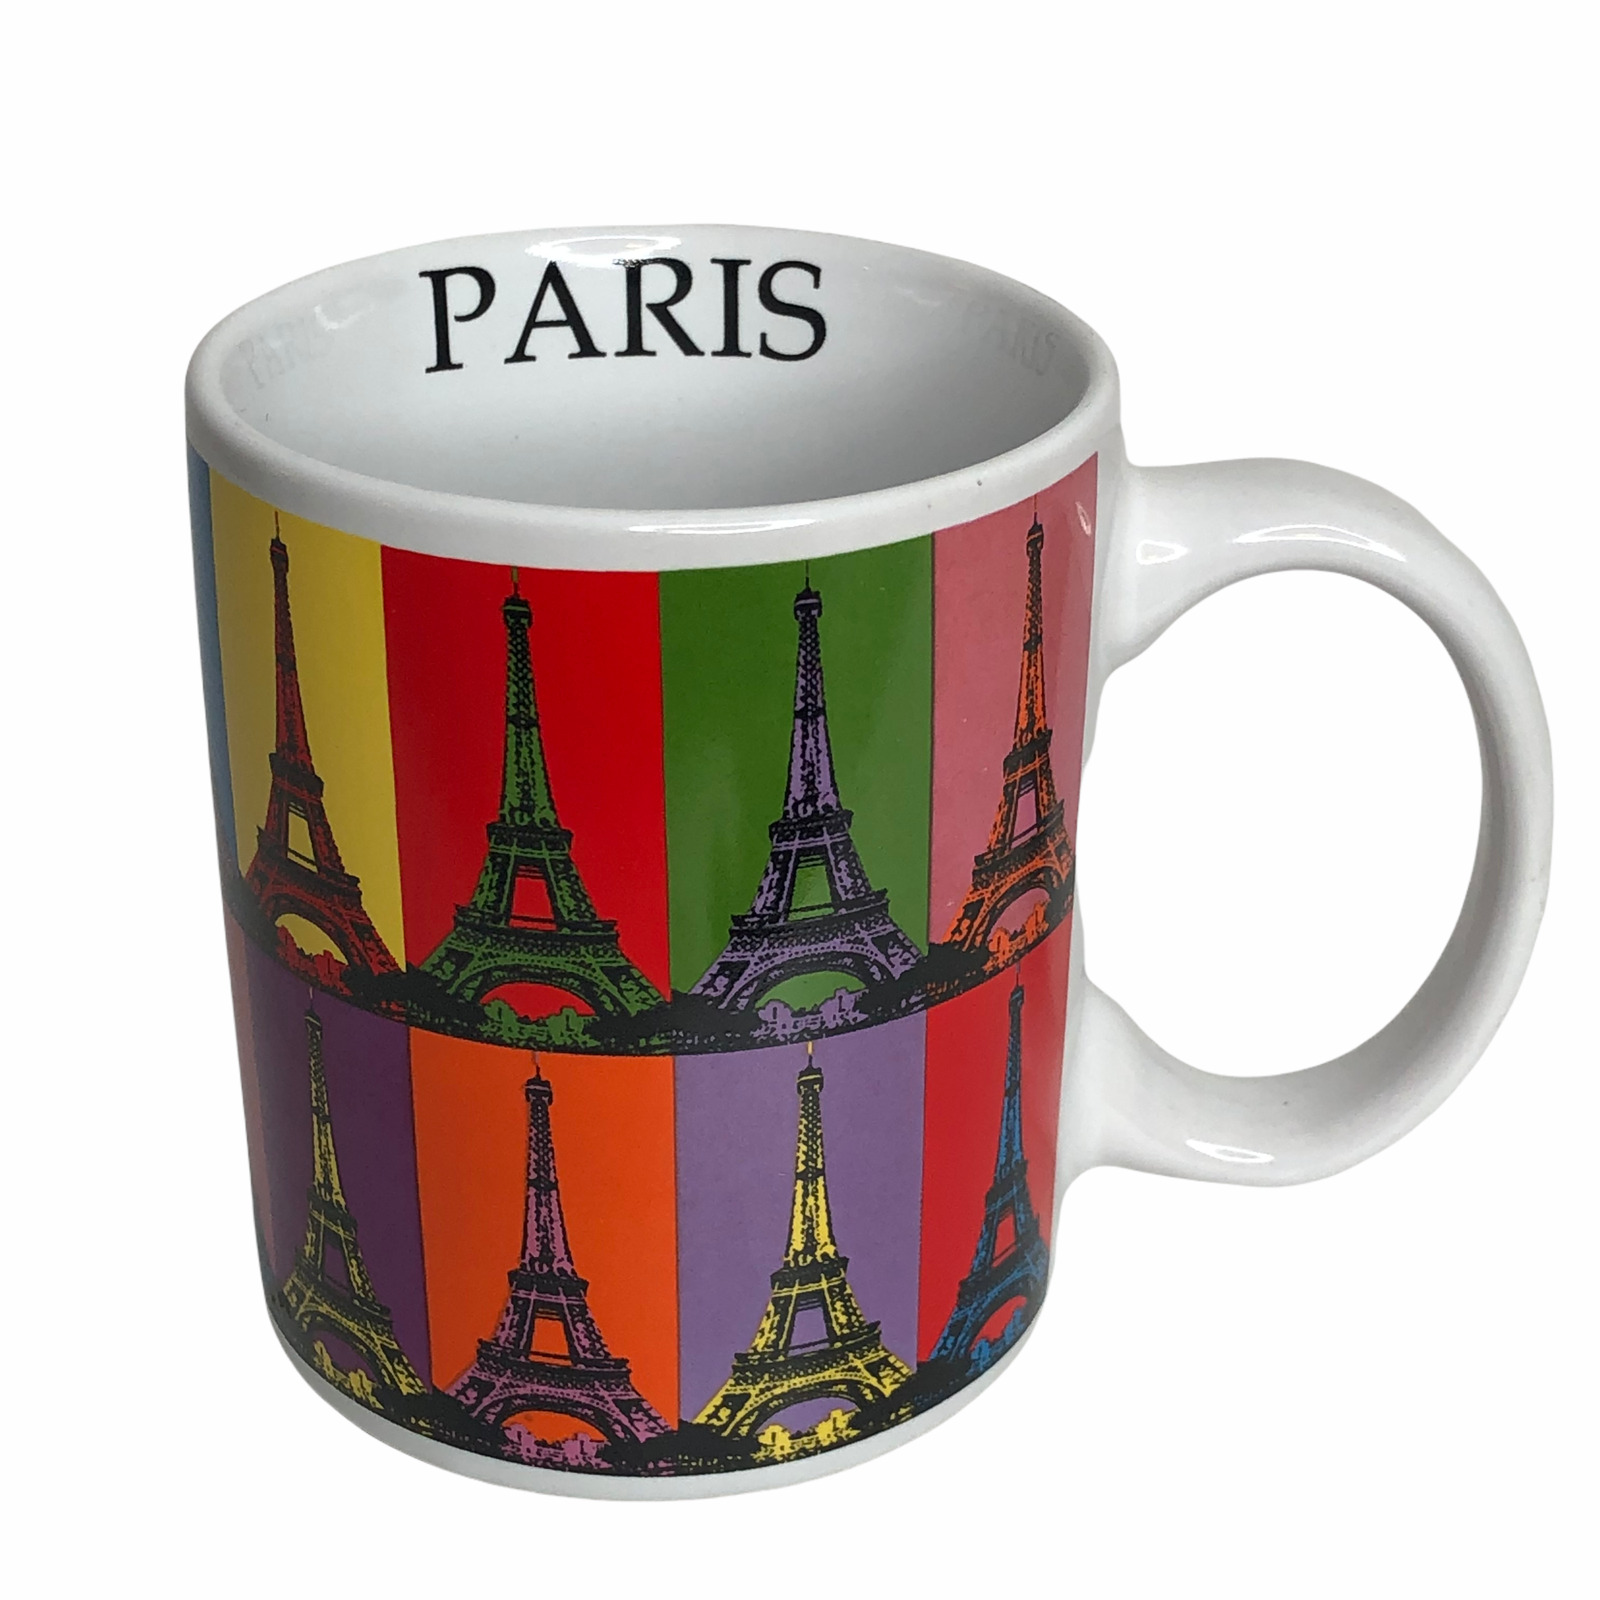 Paris Eiffel Tower Ceramic Mug Coffee Tea Cup All Over Design City Landmarks 